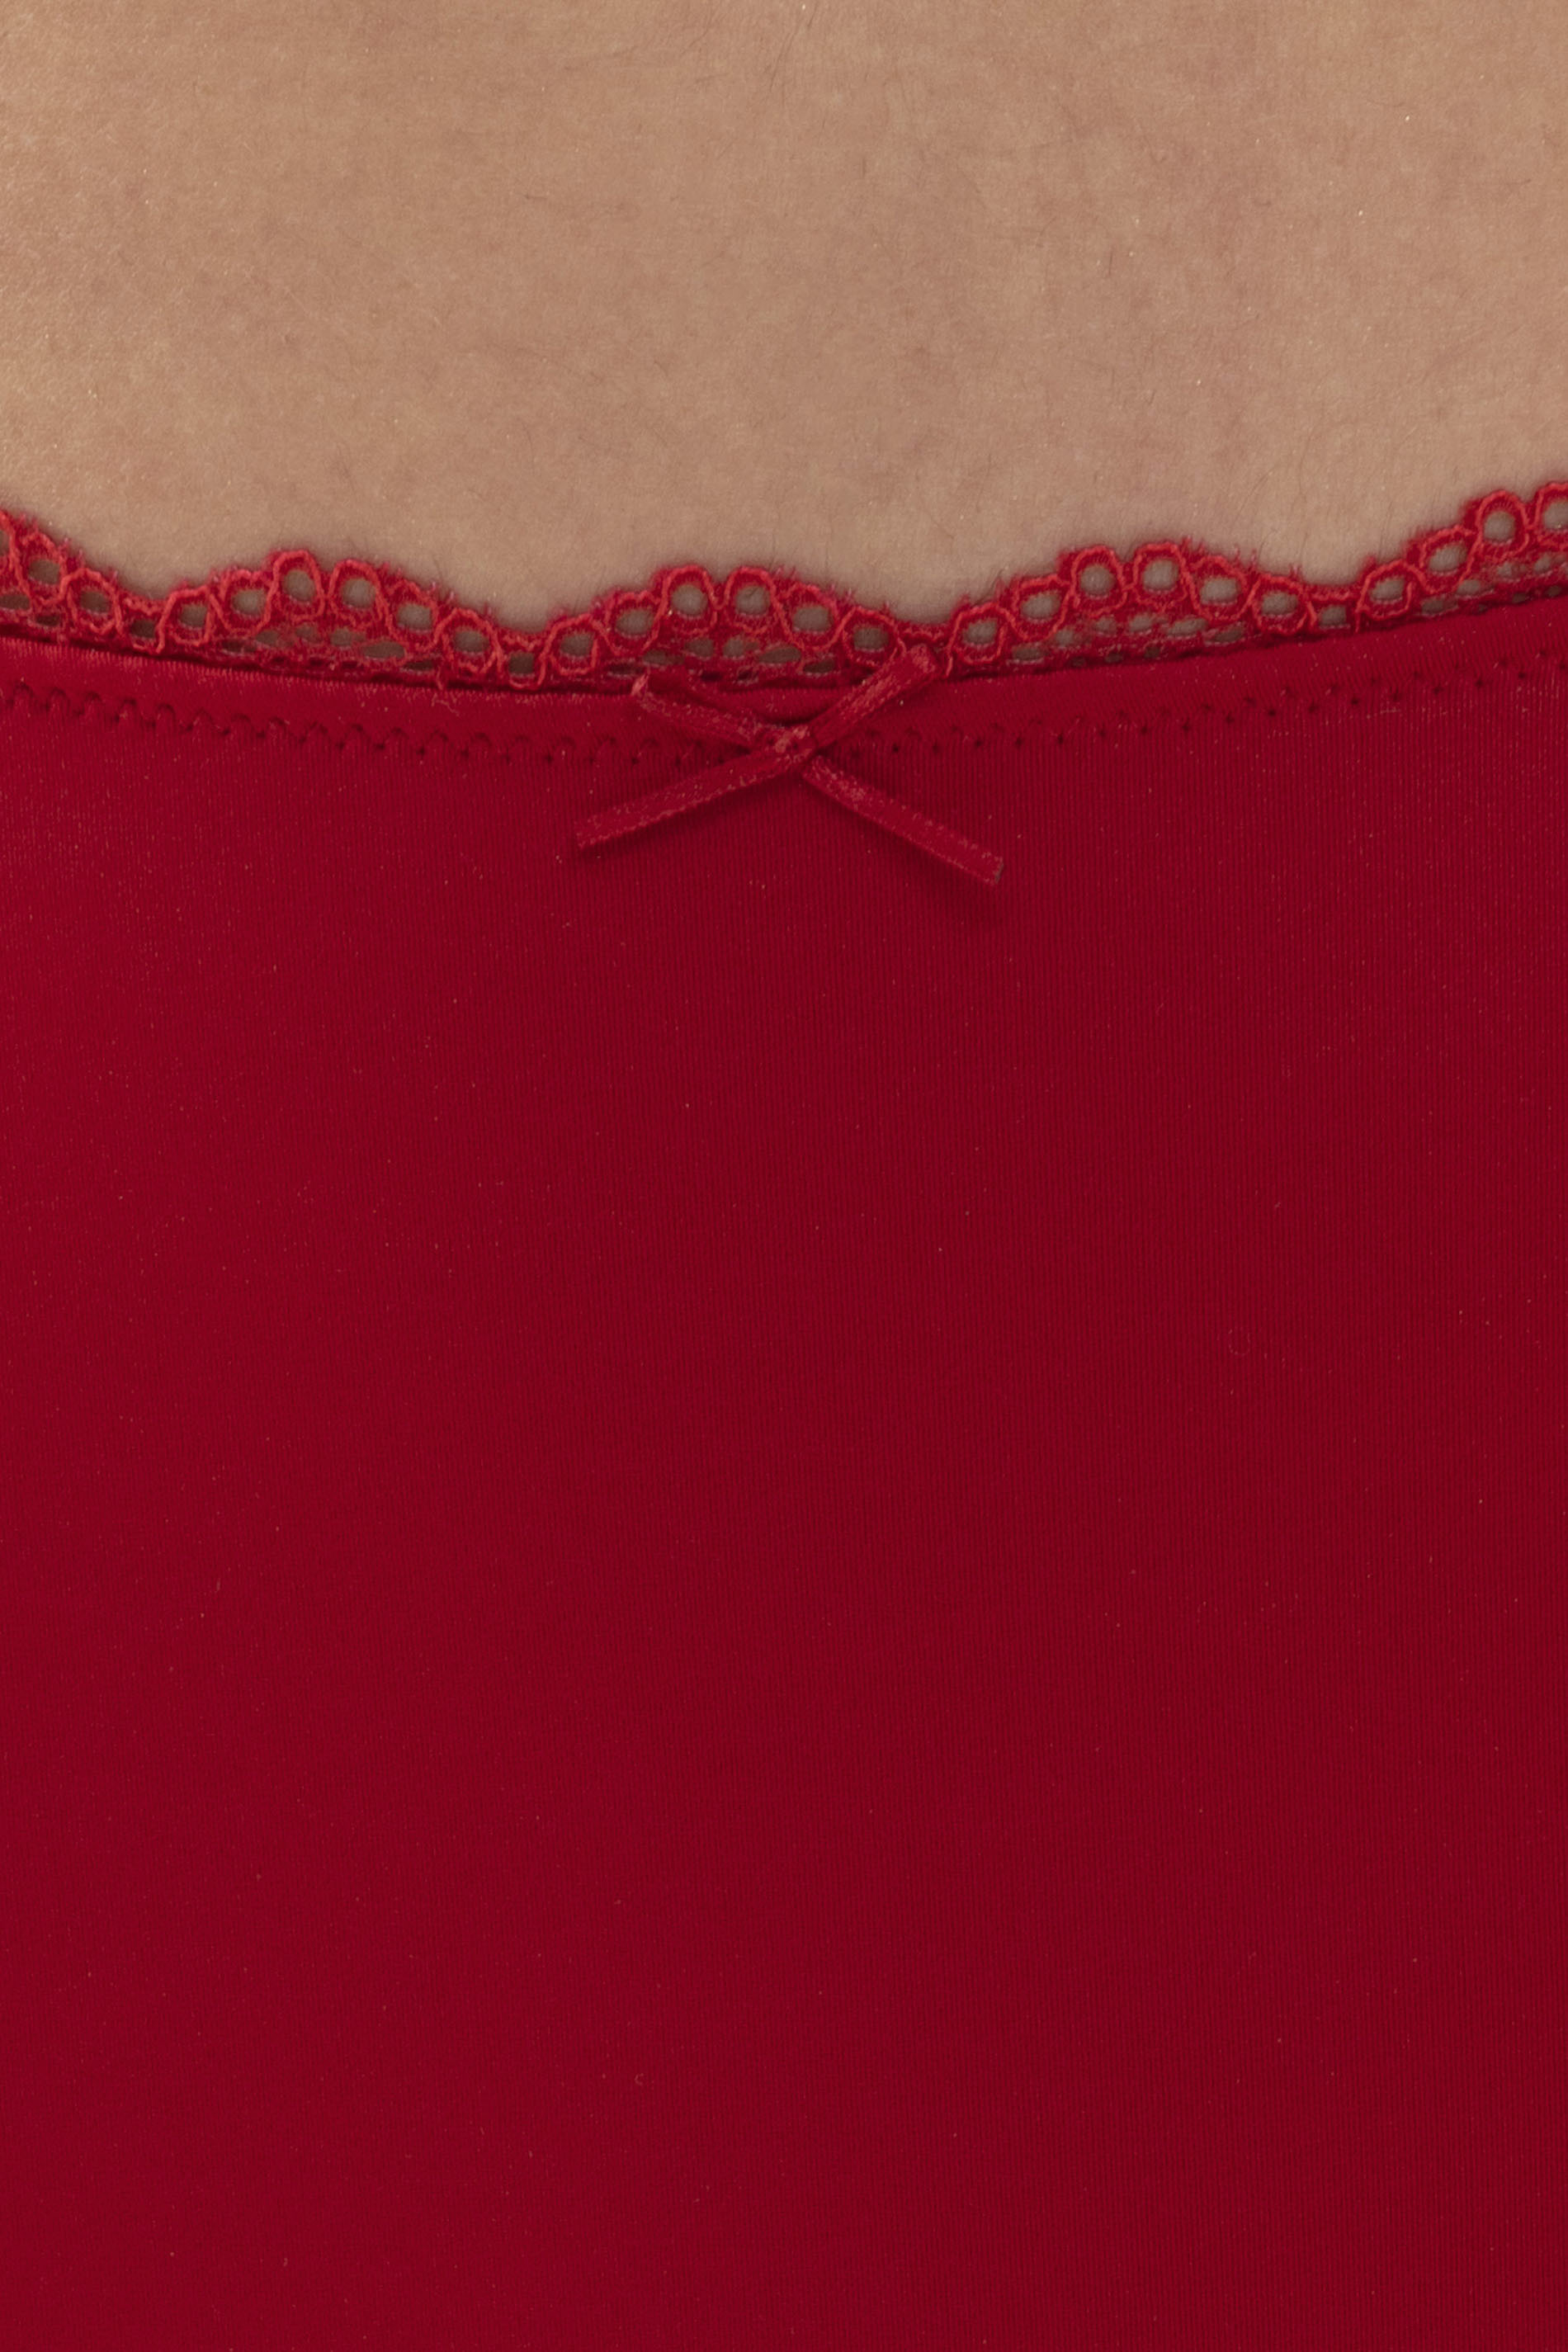 Taillen-Slip Rubin Serie Amorous Detail View 01 | mey®